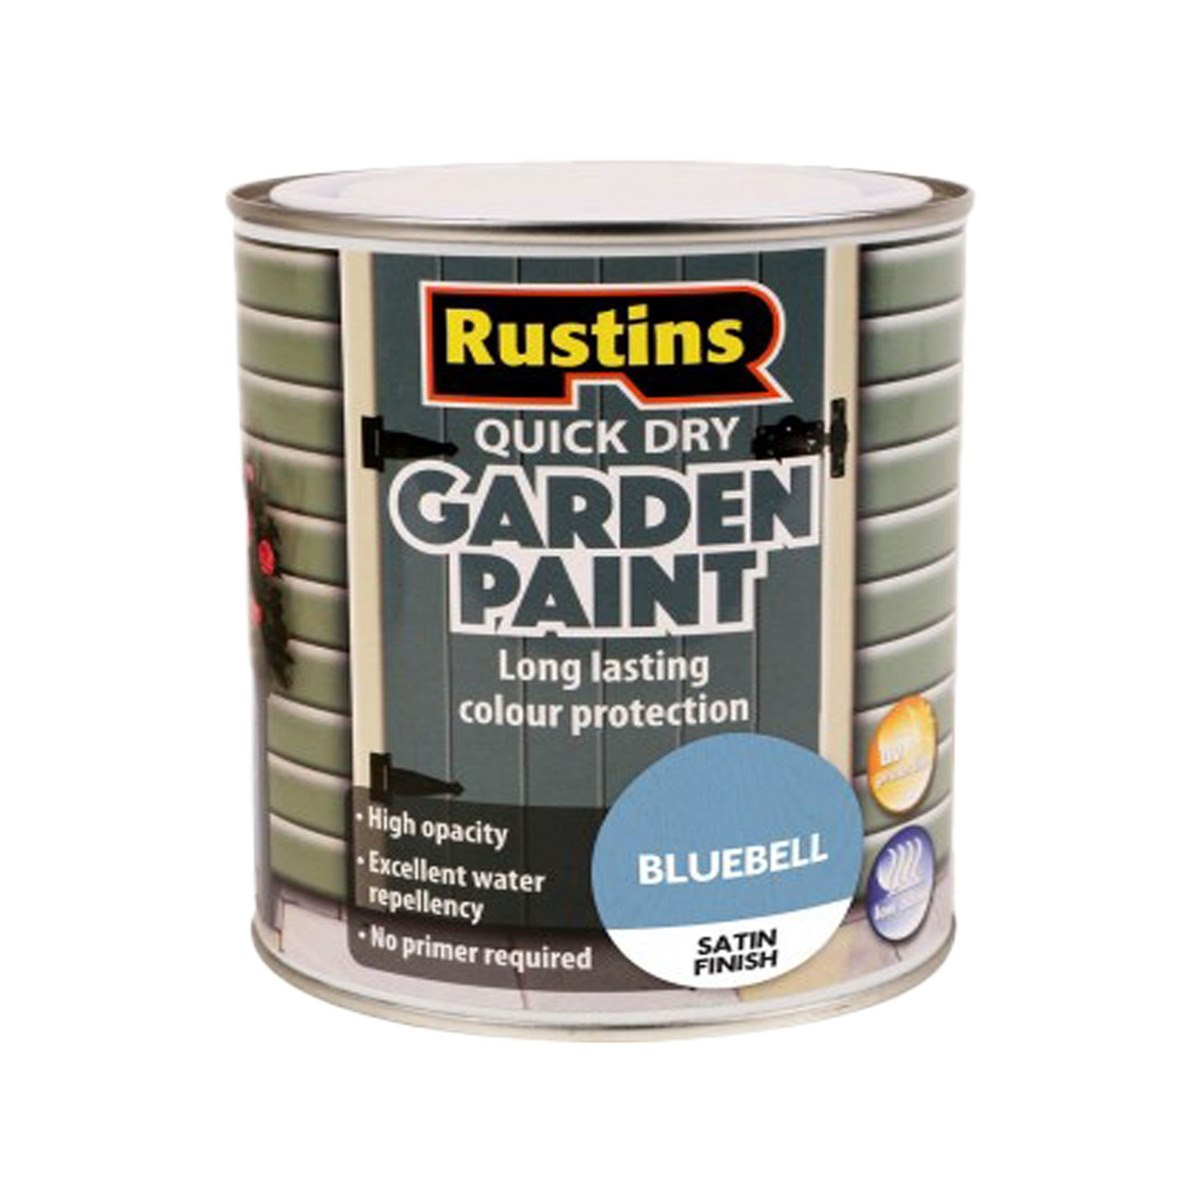 Rustins Quick Dry Garden Paint Satin Finish Bluebell